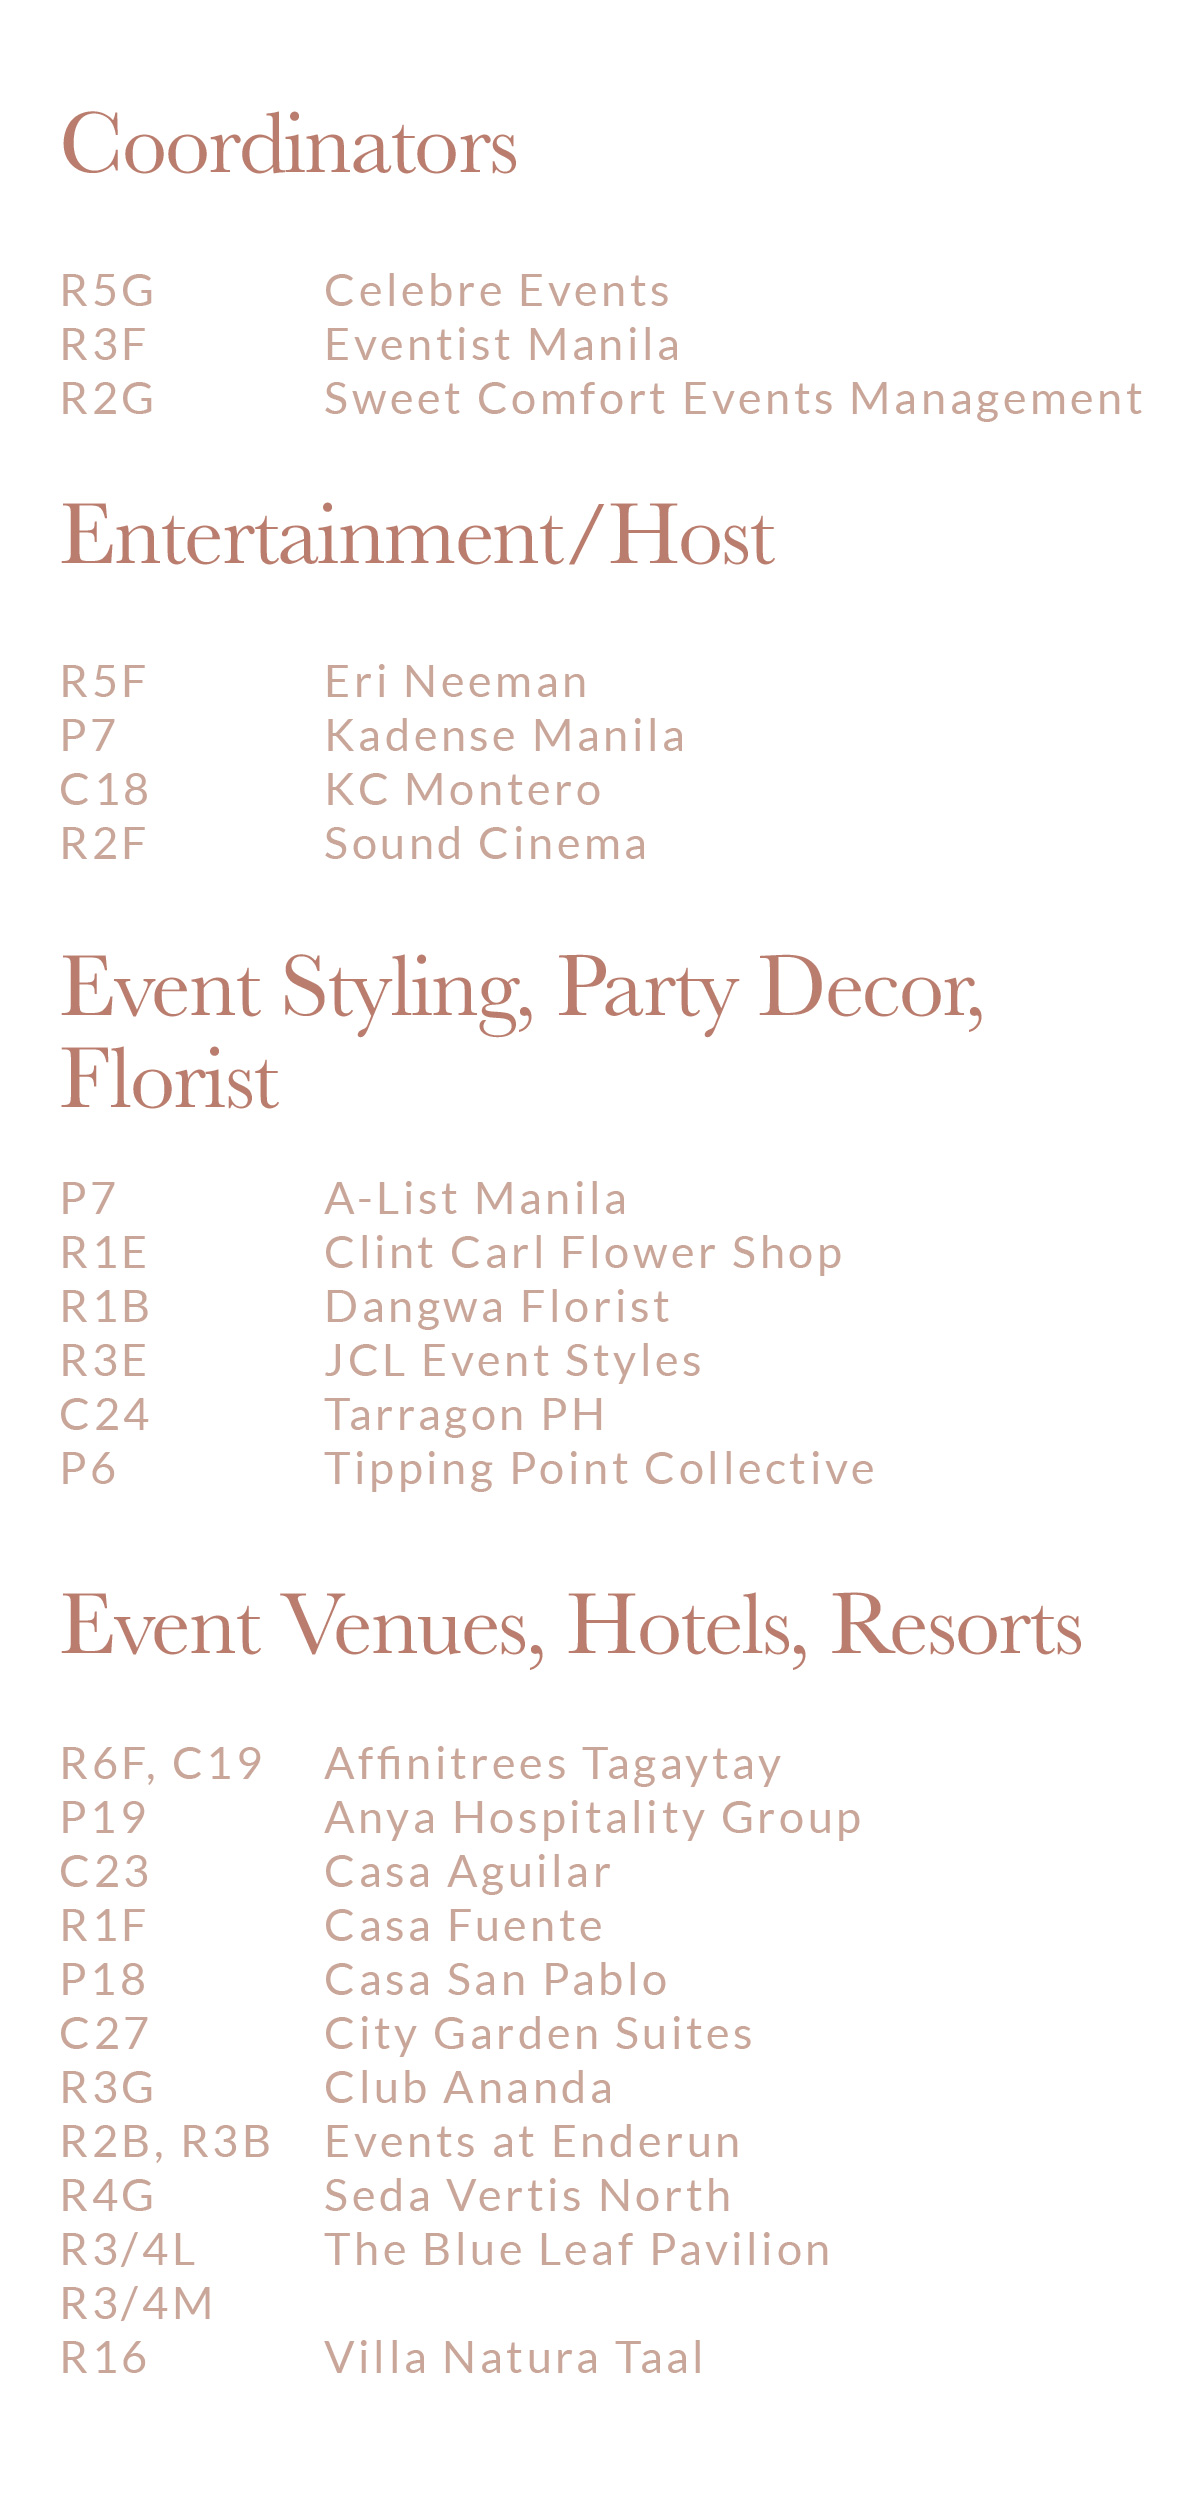 R5G, Celebre Events /R3F, Eventist Manila /R2G, Sweet Comfort Events Management /R5F, Eri Neeman /P7, Kadense Manila /C18, KC Montero /R2F, Sound Cinema /P7, A-List Manila /R1E, Clint Carl Flower Shop /R1B, Dangwa Florist /R3E, JCL Event Styles /C24, Tarragon PH /R6F, C19, Affinitrees Tagaytay /P19, Anya Hospitality Group /C23, Casa Aguilar /R1F, Casa Fuente /P18, Casa San Pablo /C27, City Garden Suites /R3G, Club Ananda /R2B, R3B, Events at Enderun /R4G, Seda Vertis North /R3L, R4L, R3M, R4M, The Blue Leaf Pavilion /R1G, Villa Natura Taal